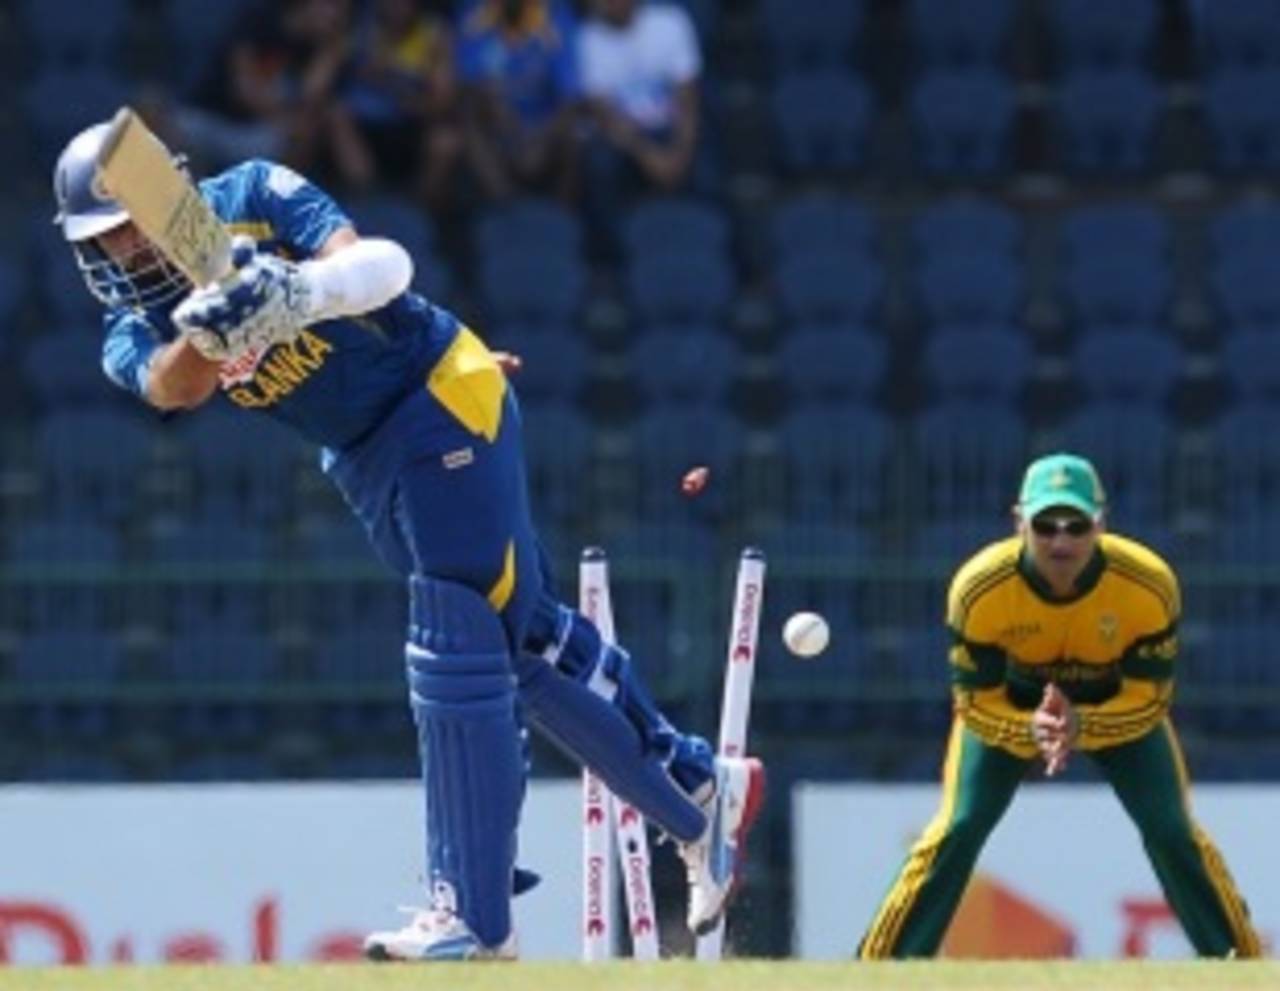 Tillakaratne Dilshan was bowled by Chris Morris, Sri Lanka v South Africa, 1st ODI, Colombo, July 20, 2013